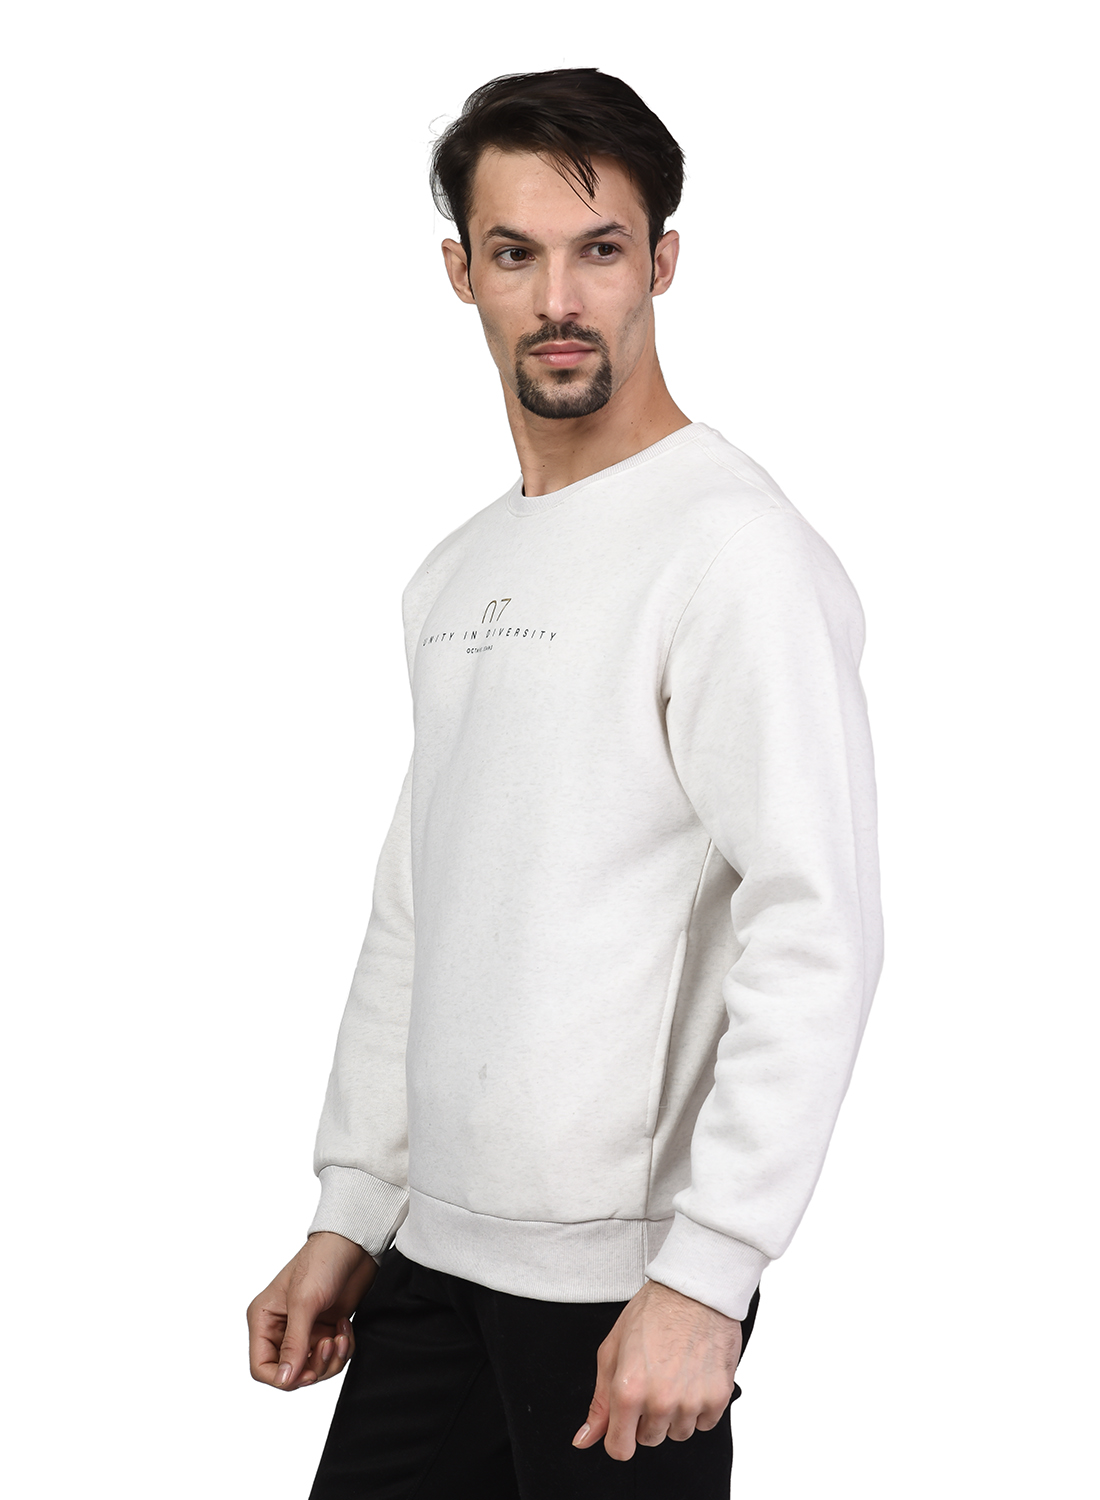 Buy Octave Men's White Melange Sweatshirt Online @ ₹1014 from ShopClues